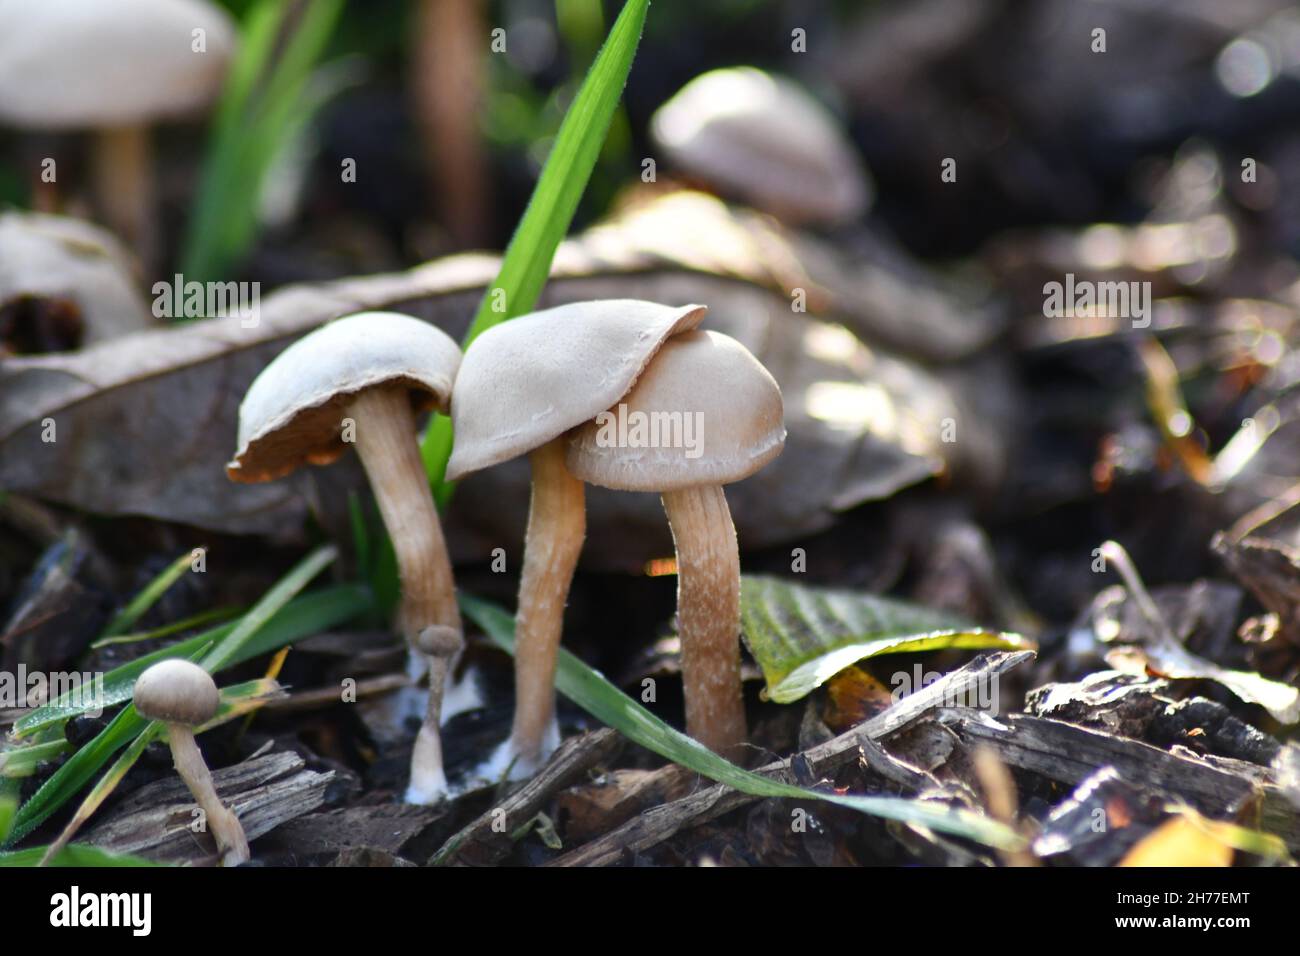 A Trio of wild mushrooms, fungi, Stock Photo